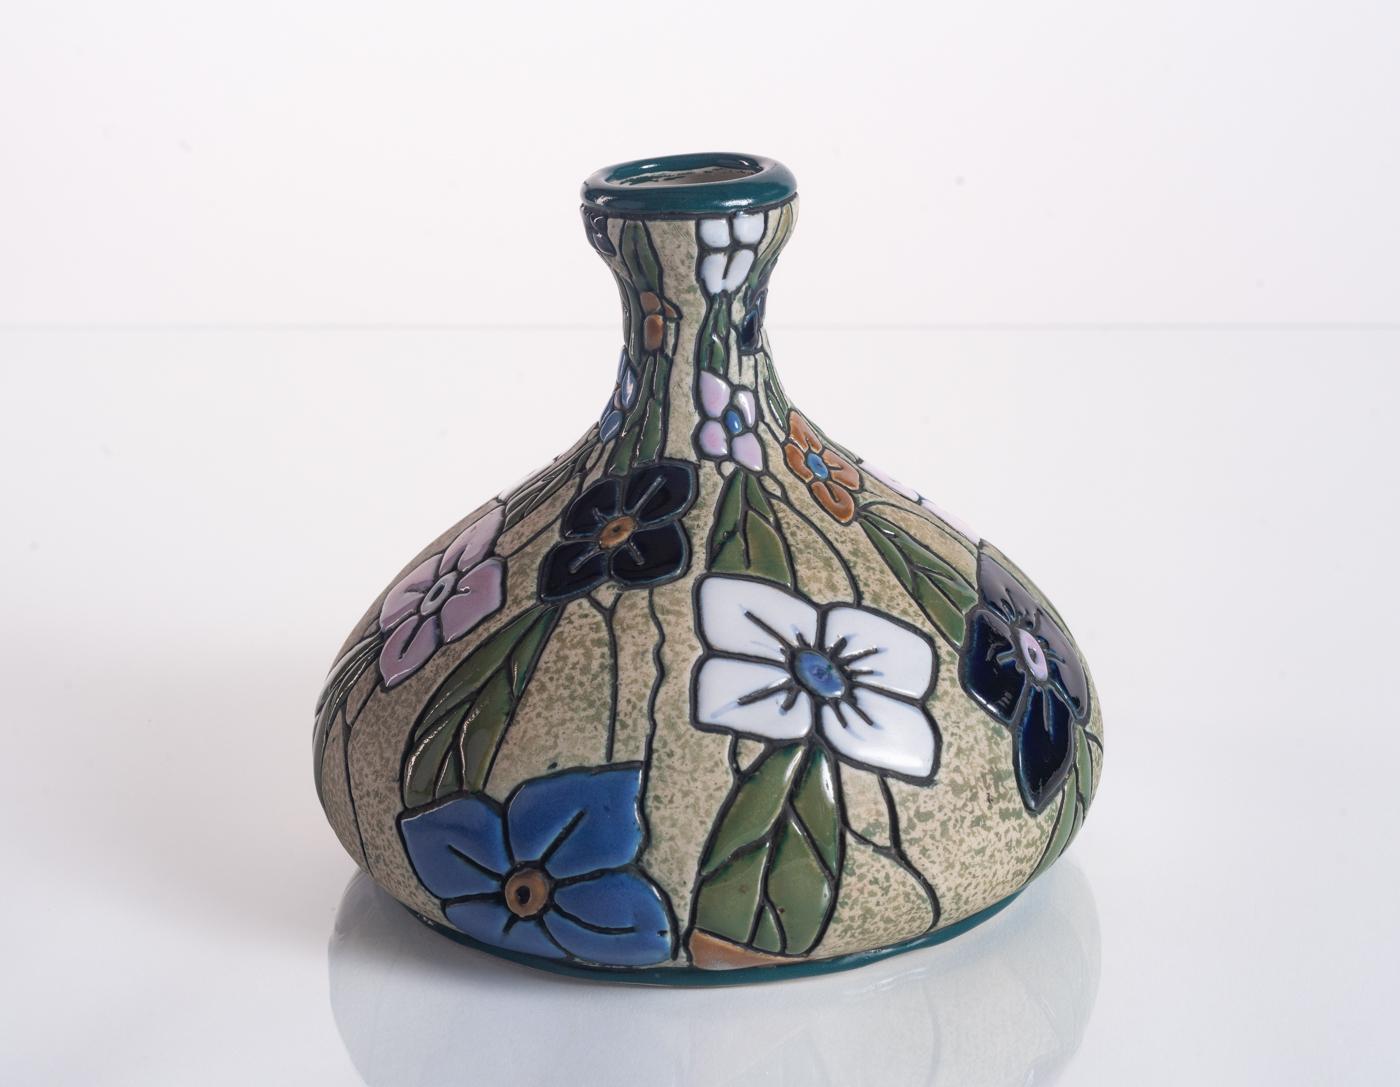 Cloisonné-Blumenvase von Amphora, Jugendstil um 1910 (Art nouveau), Art, von Reissner & Kessel for Amphora